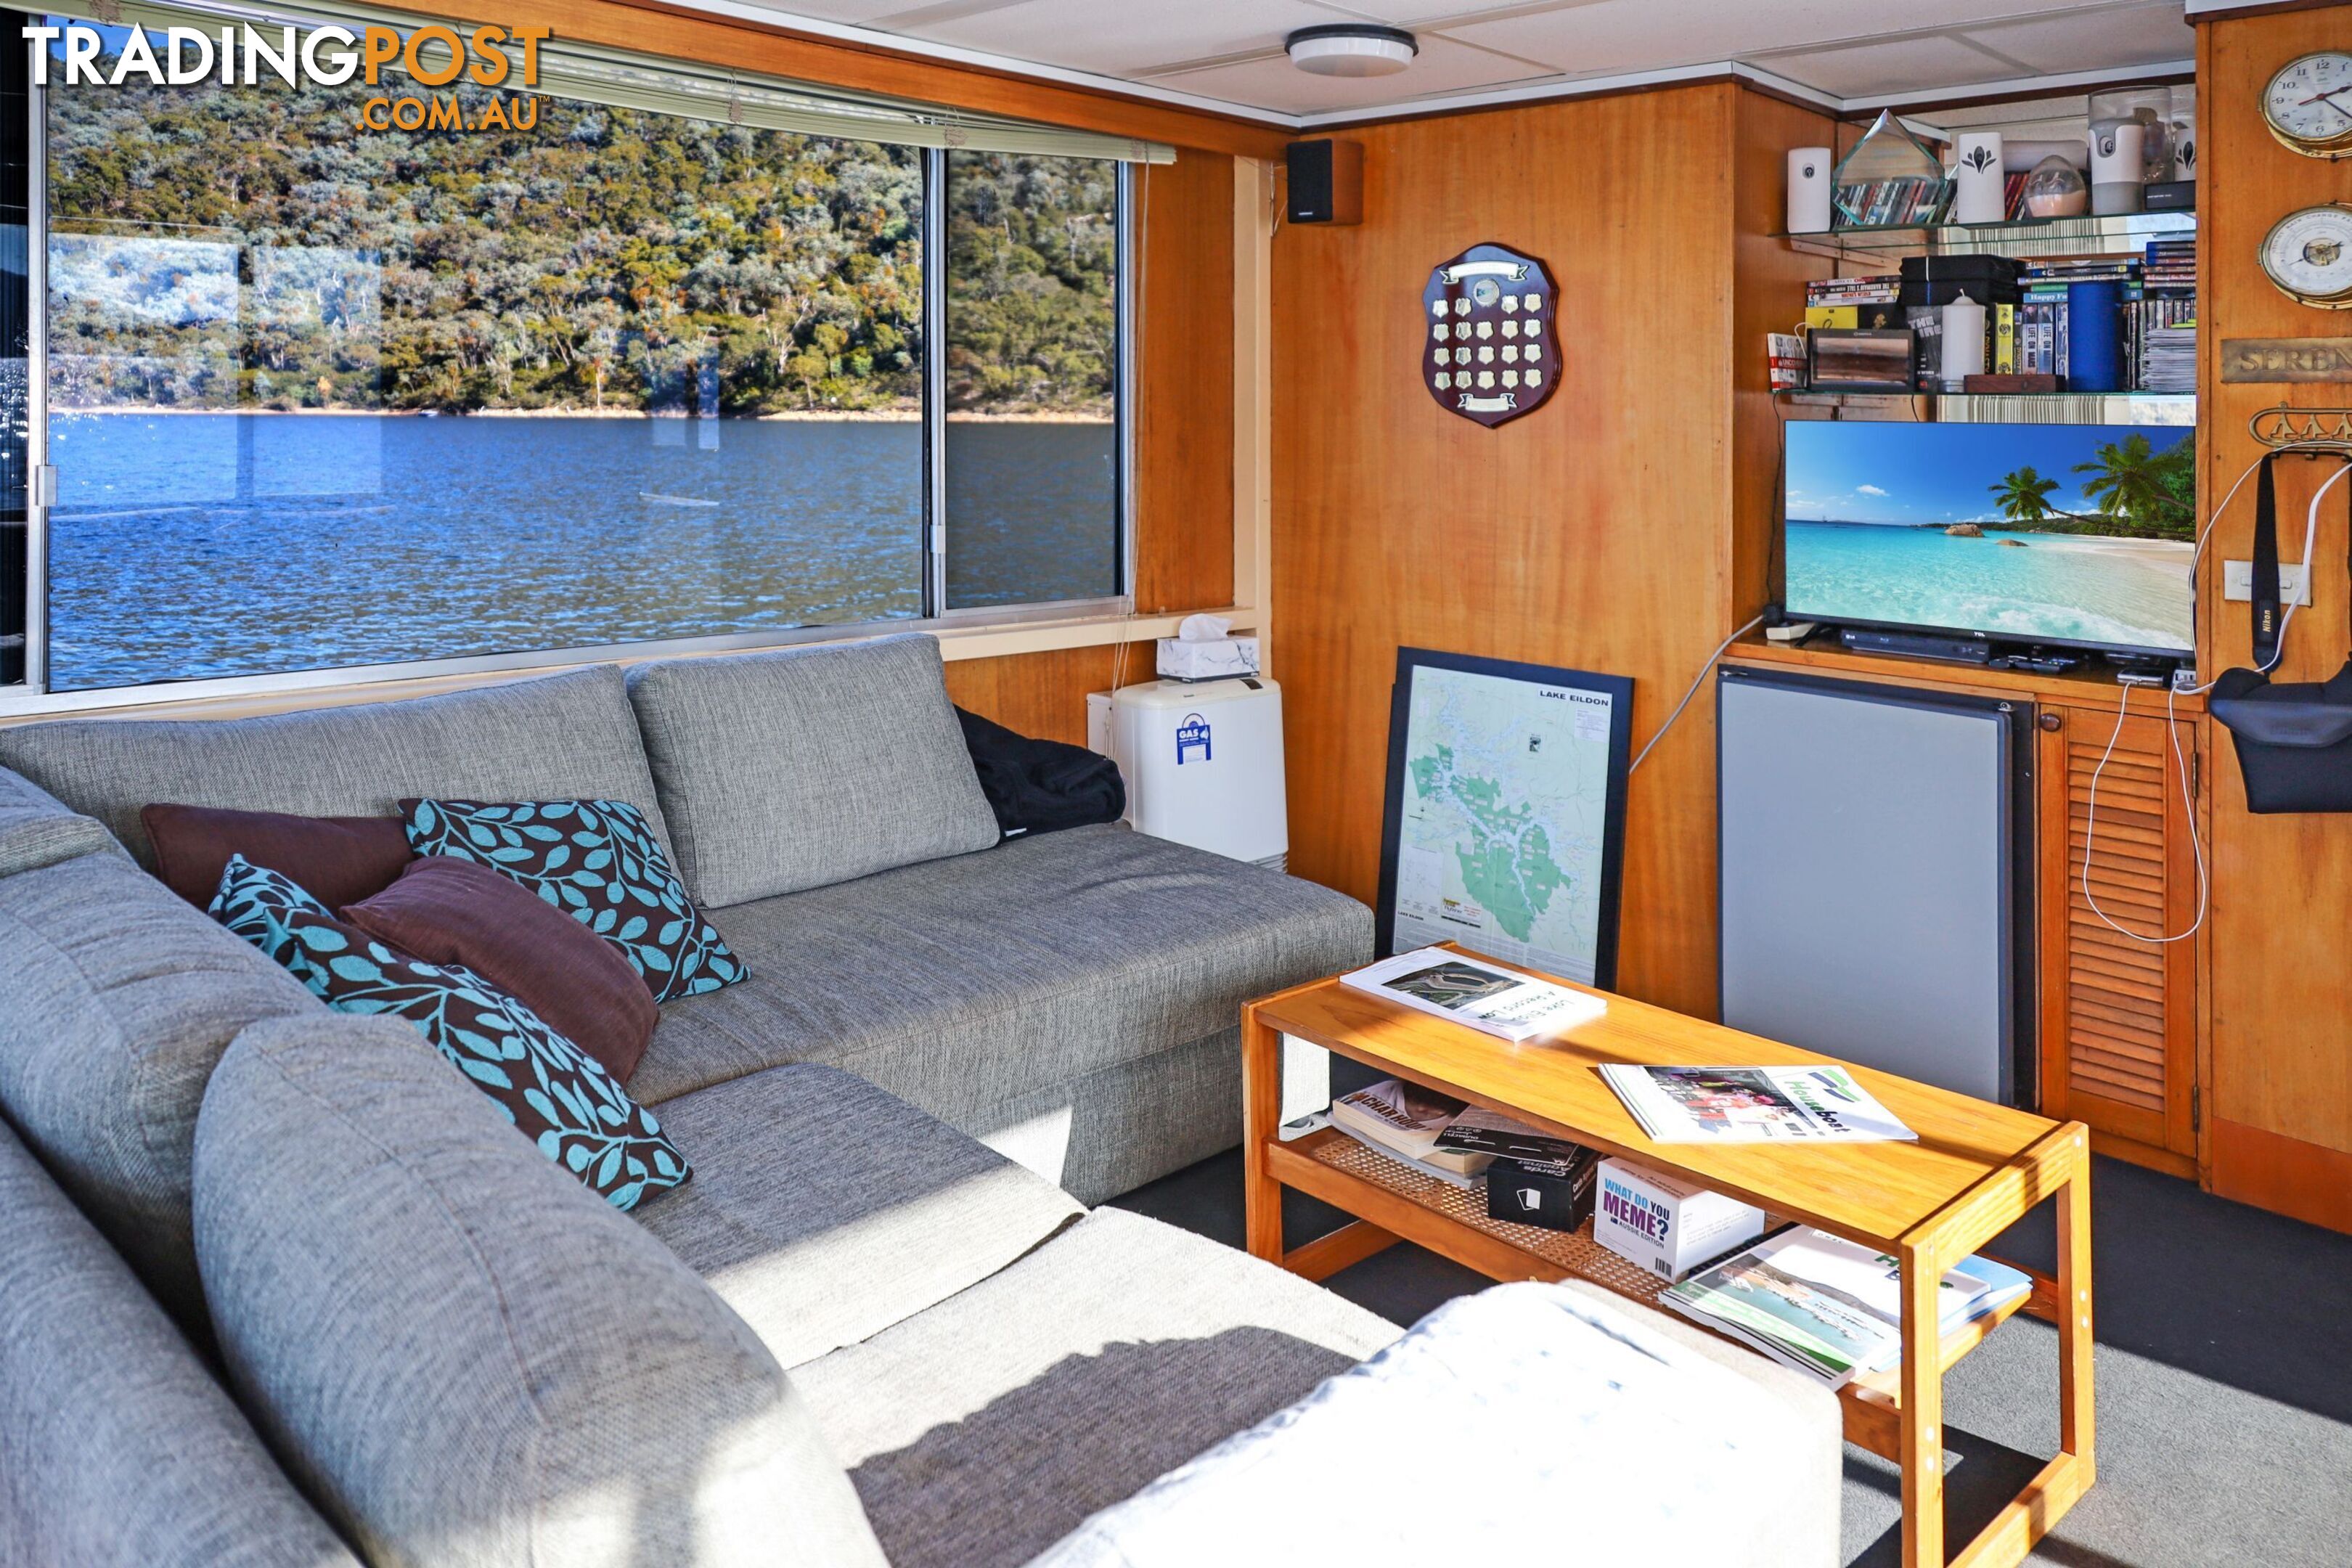 Serena Z Houseboat Holiday Home on Lake Eildon